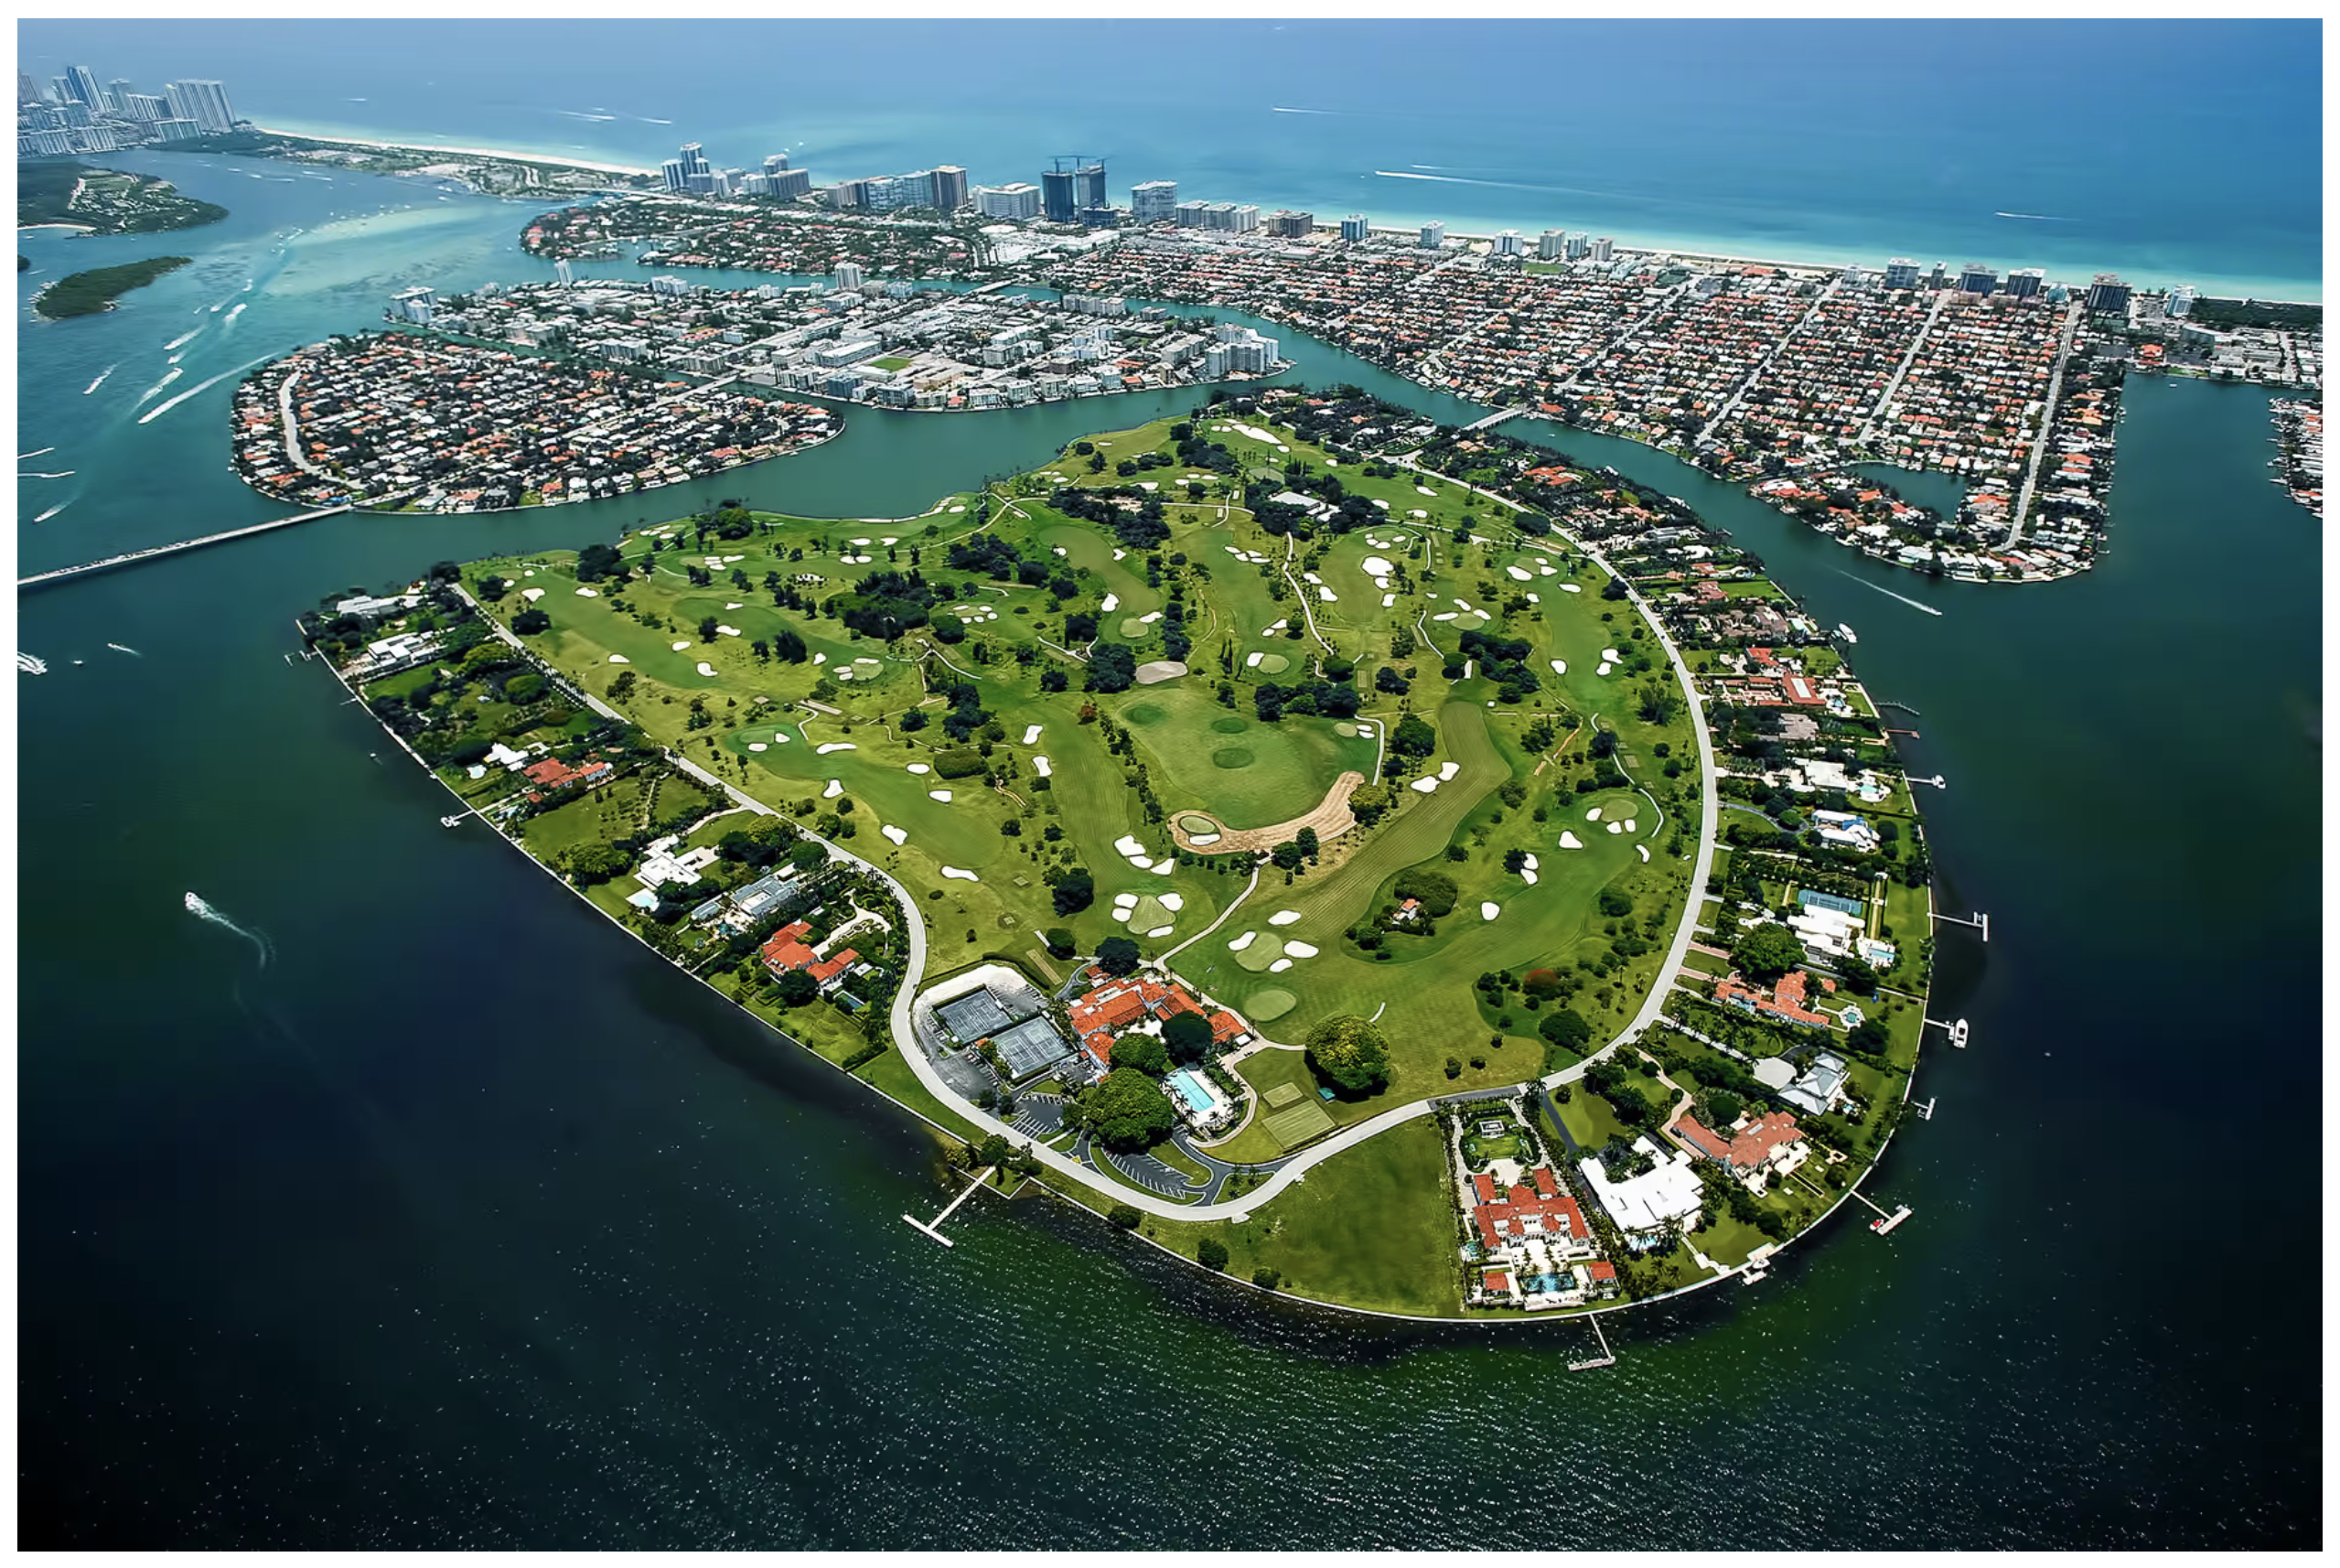 Miami's "Billionaire Bunker” is Indian Creek Island.